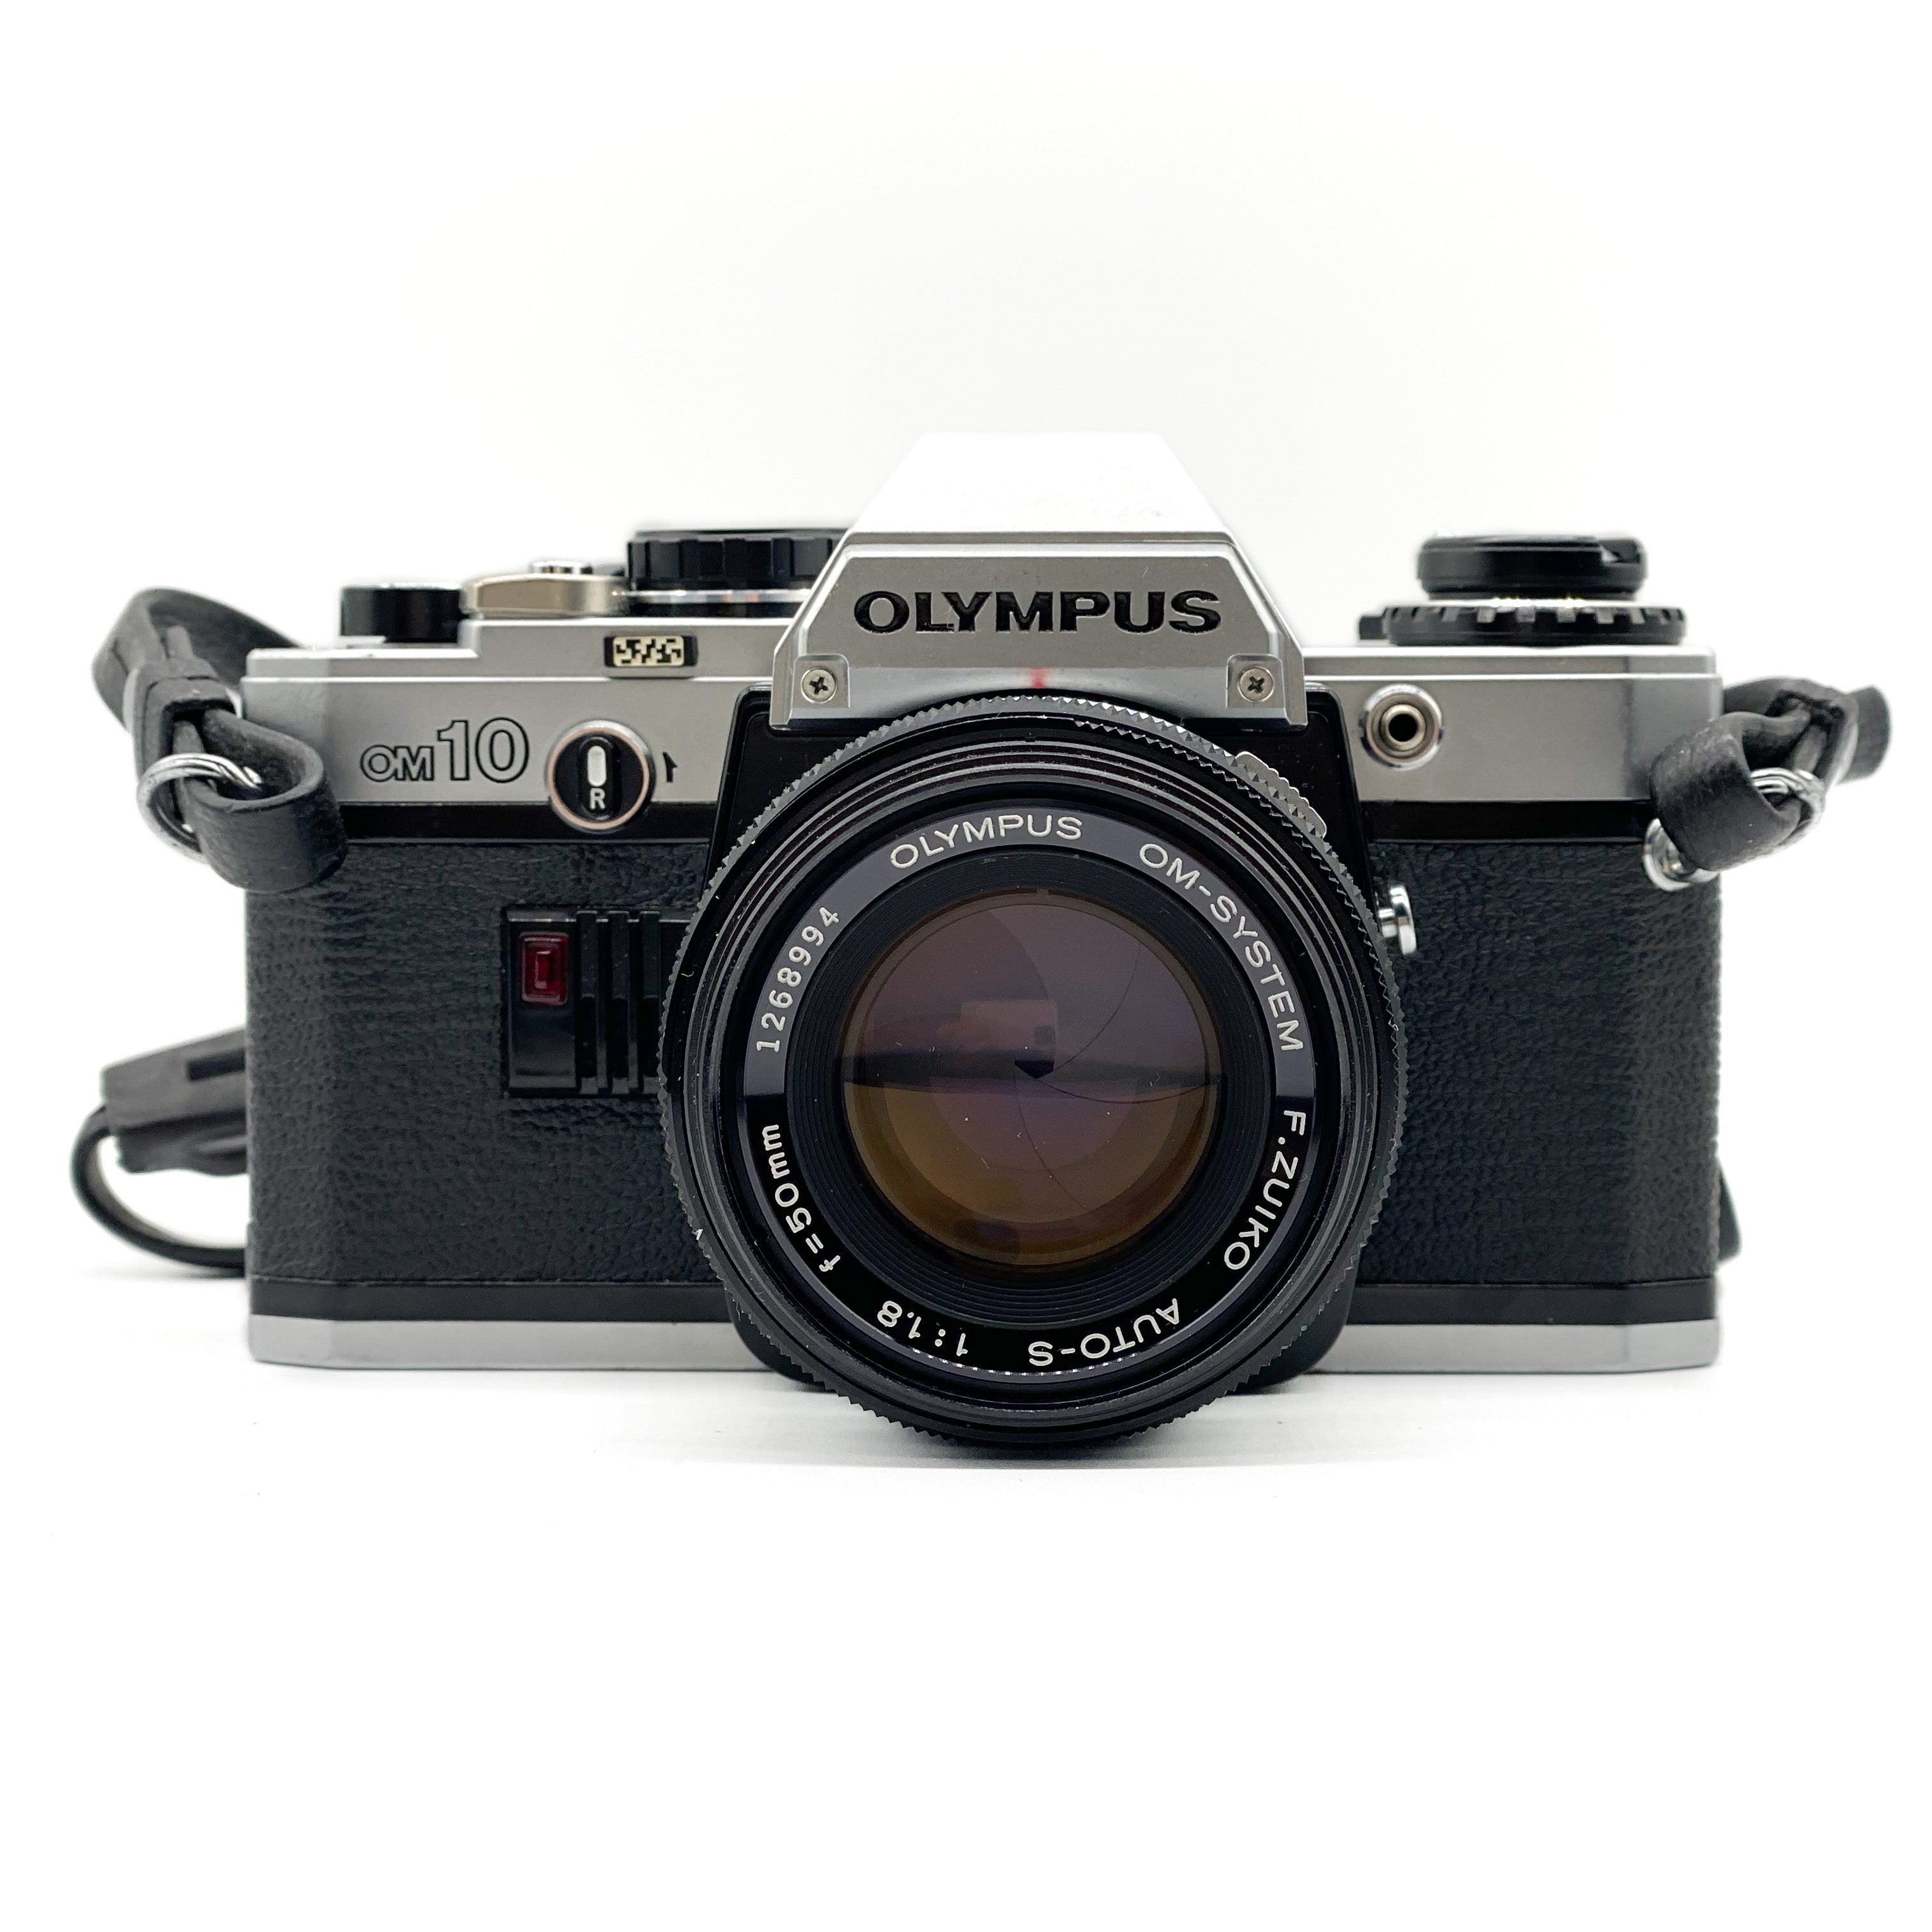 Olympus OM10 w/ OM-SYSTEM F.ZUIKO AUTO-S f/1.8 50mm